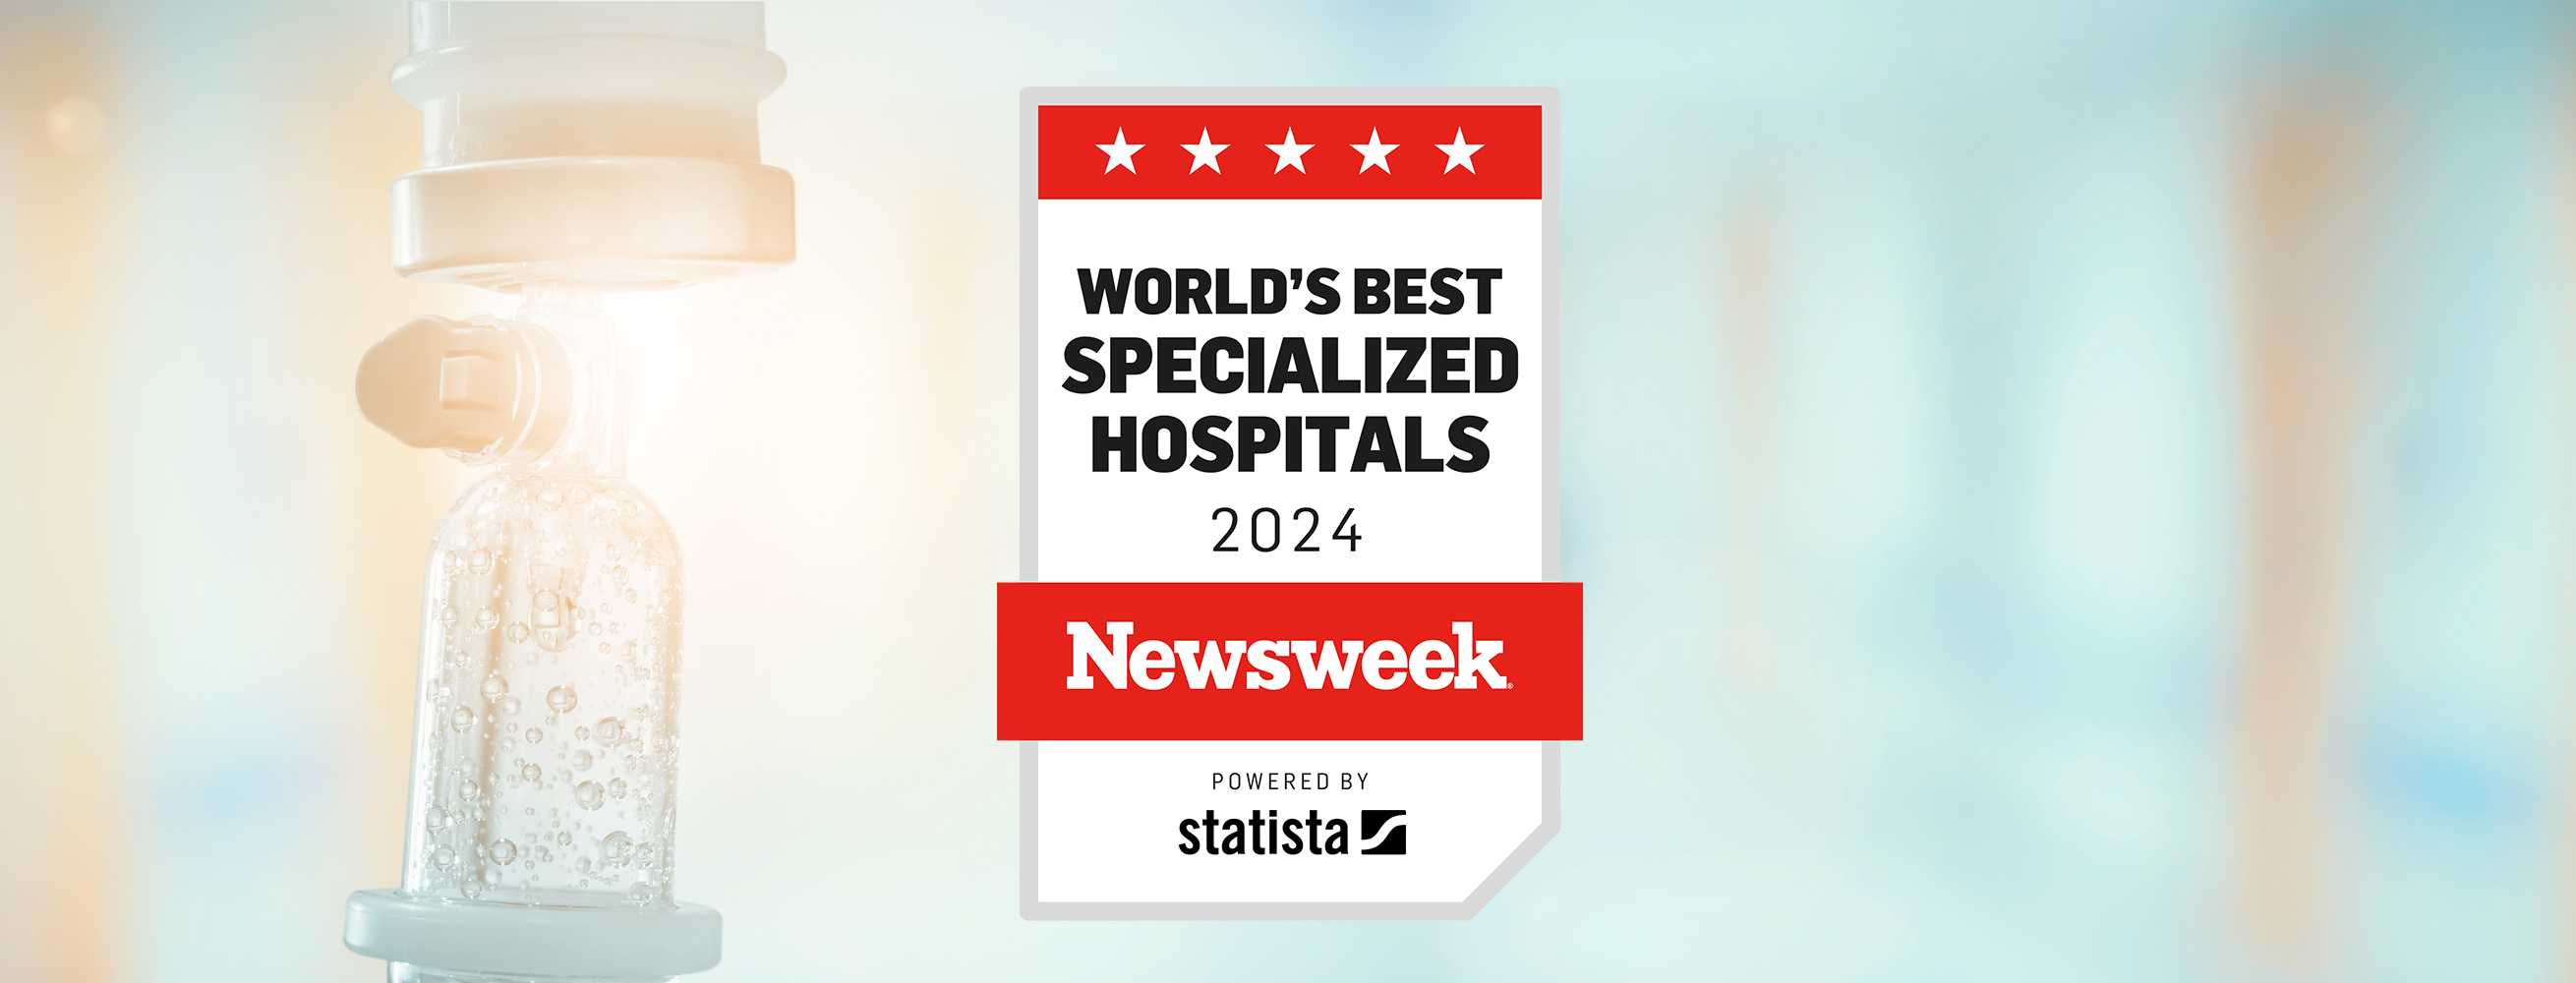 World's Best Specialized Hospitals 2024 Survey 'Newsweek' News